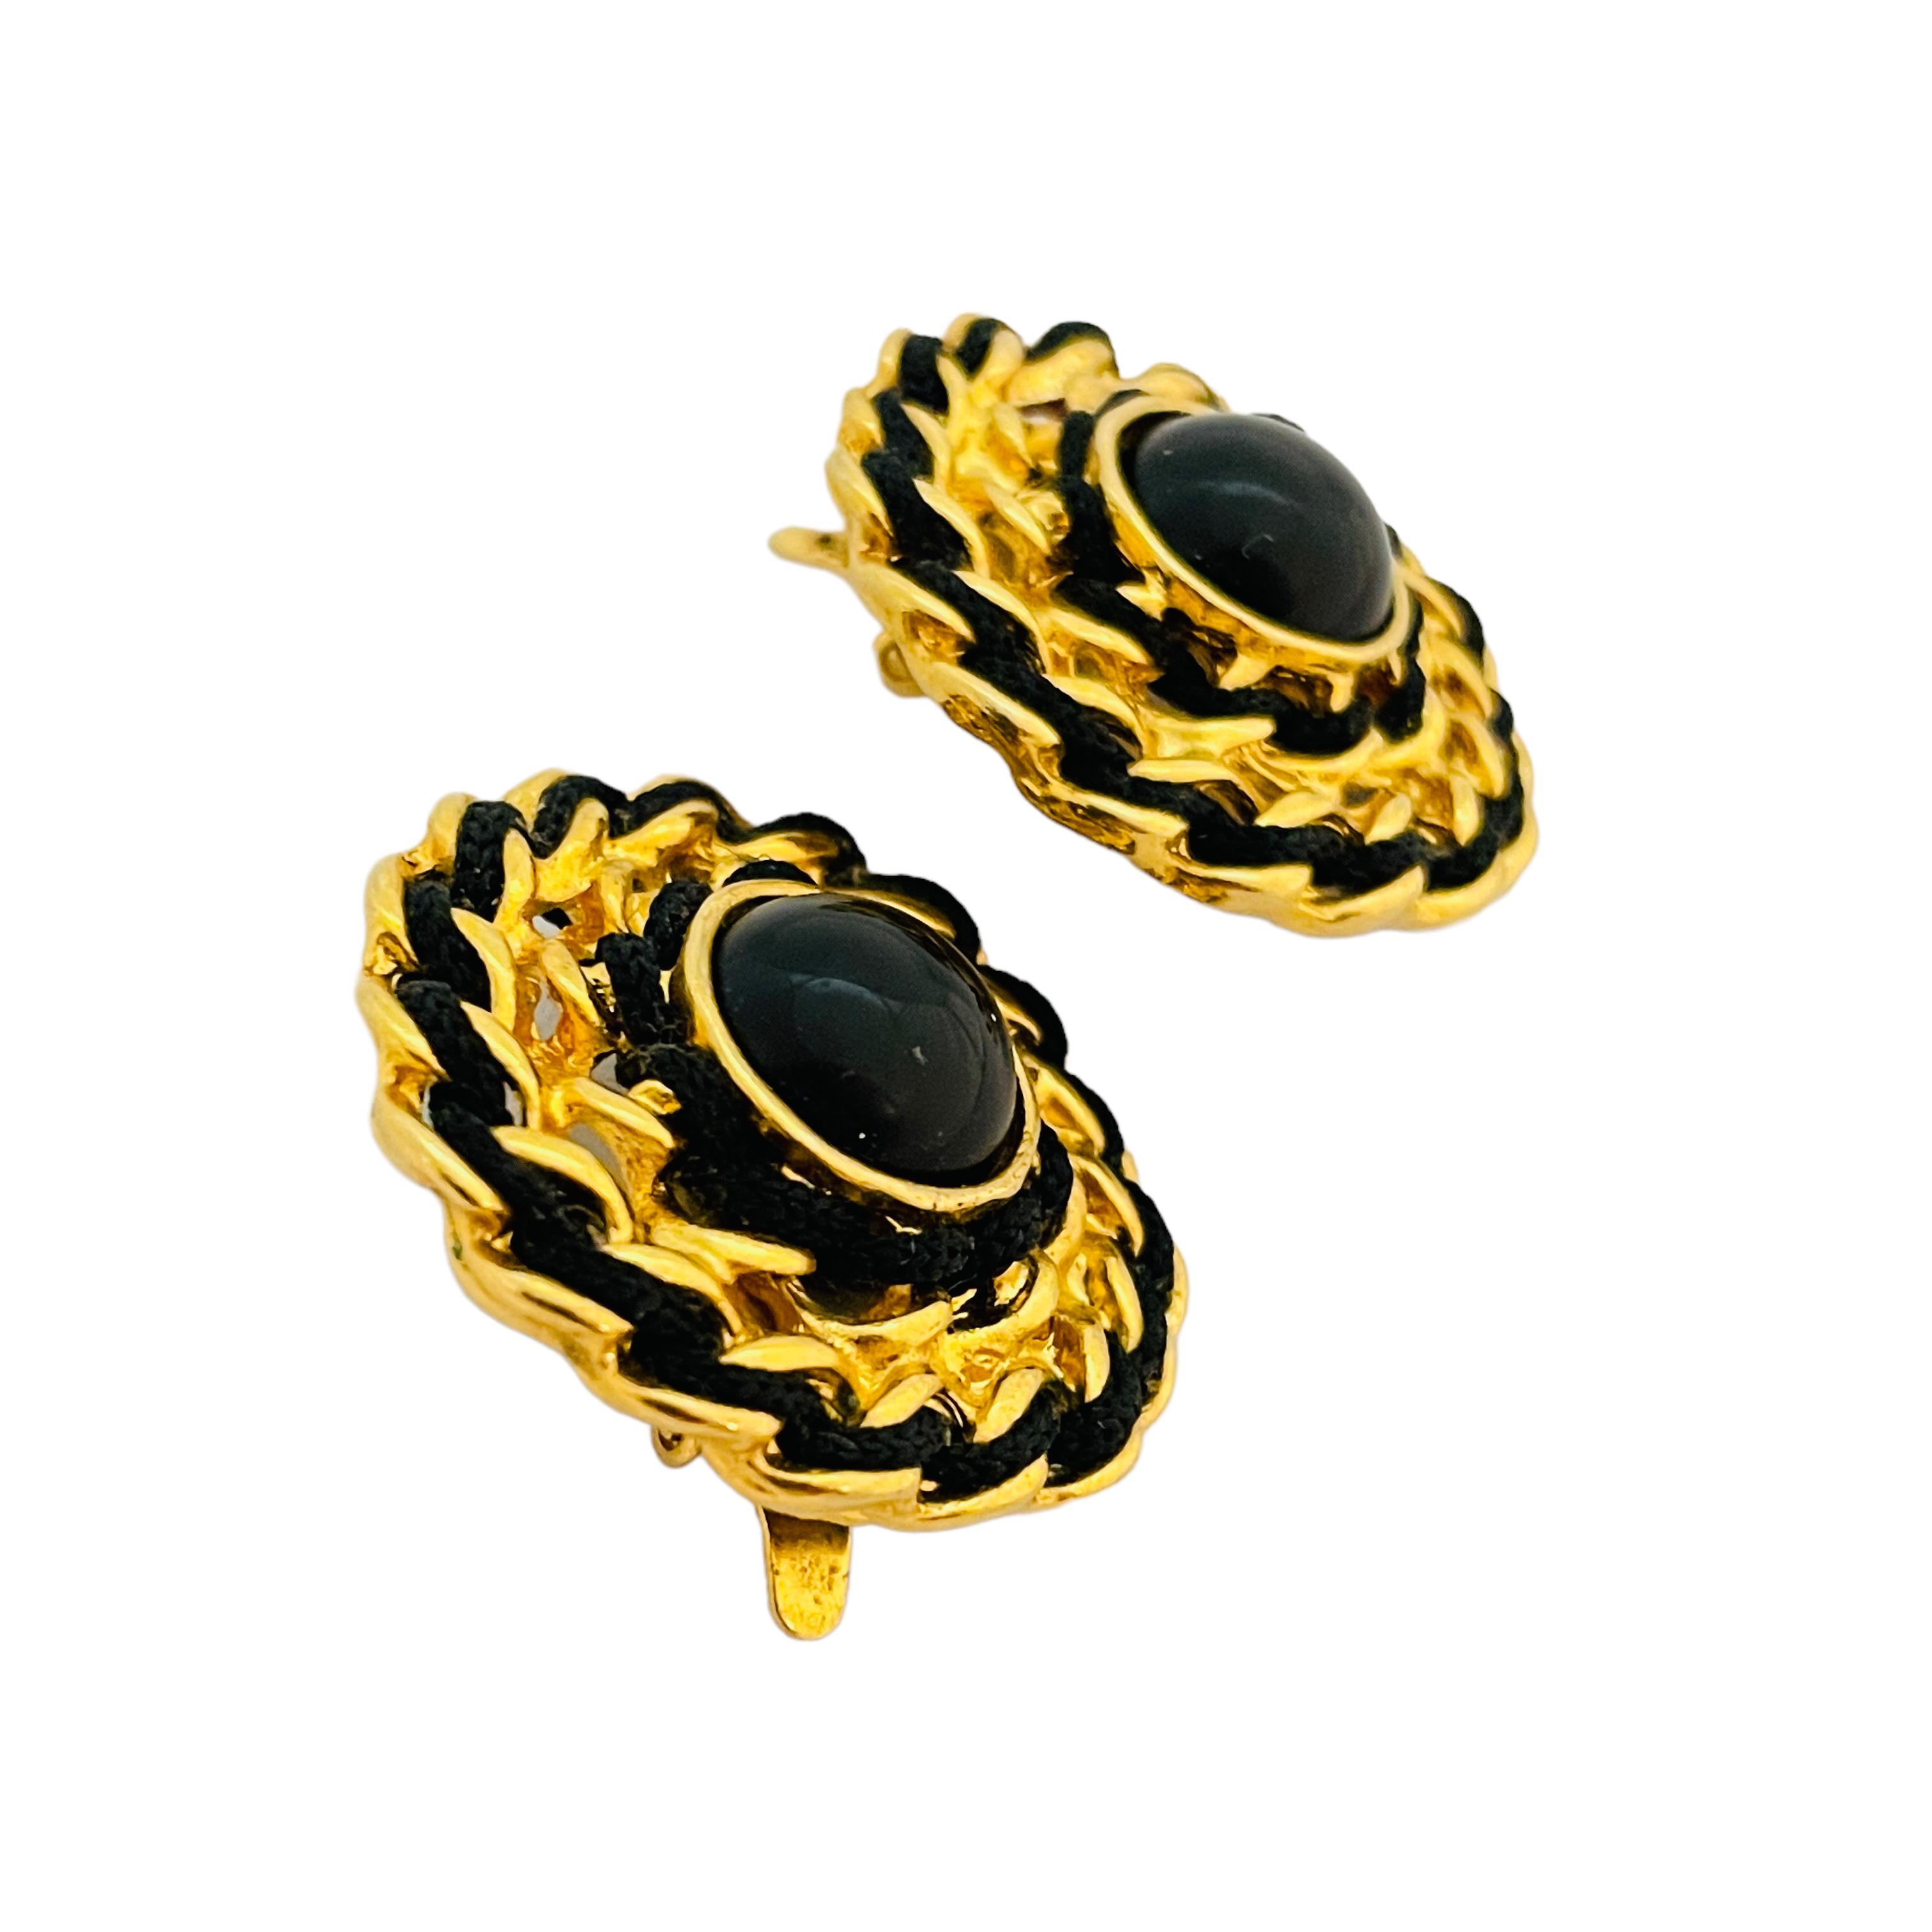 DETAILS

• signed TRIFARI TM

• gold tone with black lucite

• vintage designer clip on earrings

MEASUREMENTS

• 1.13